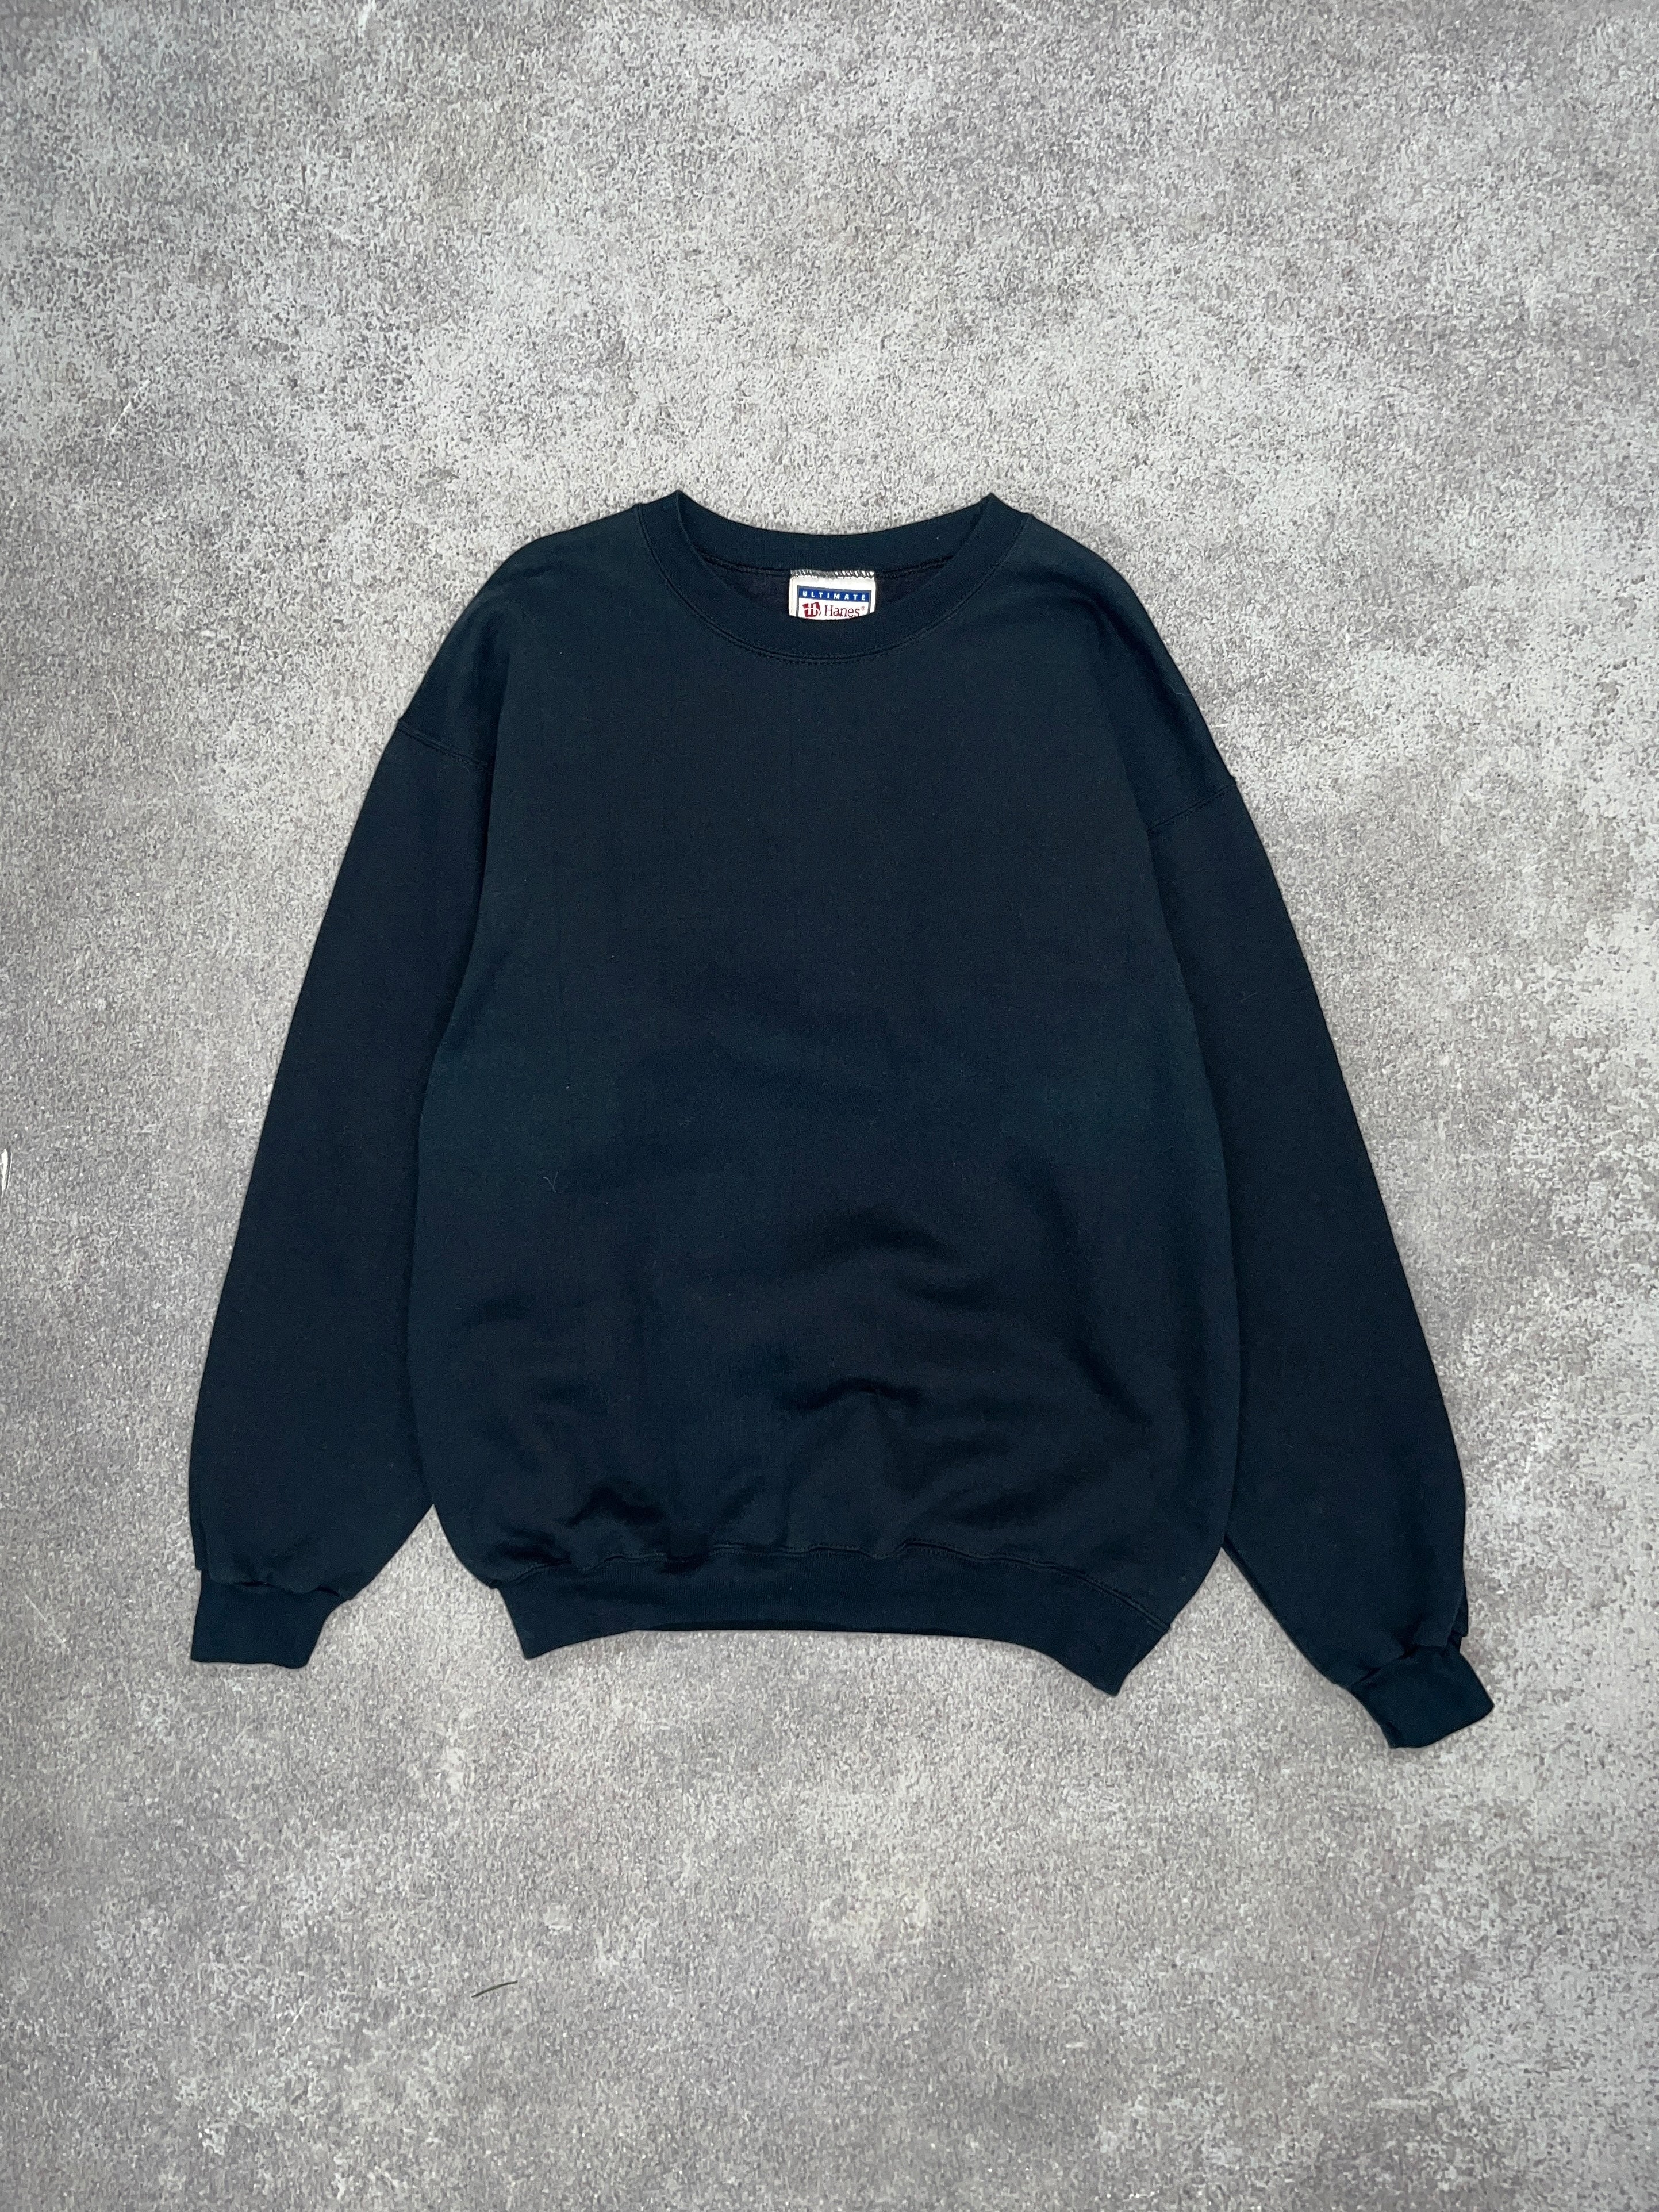 Vintage Blank Sweater Black // Medium - RHAGHOUSE VINTAGE